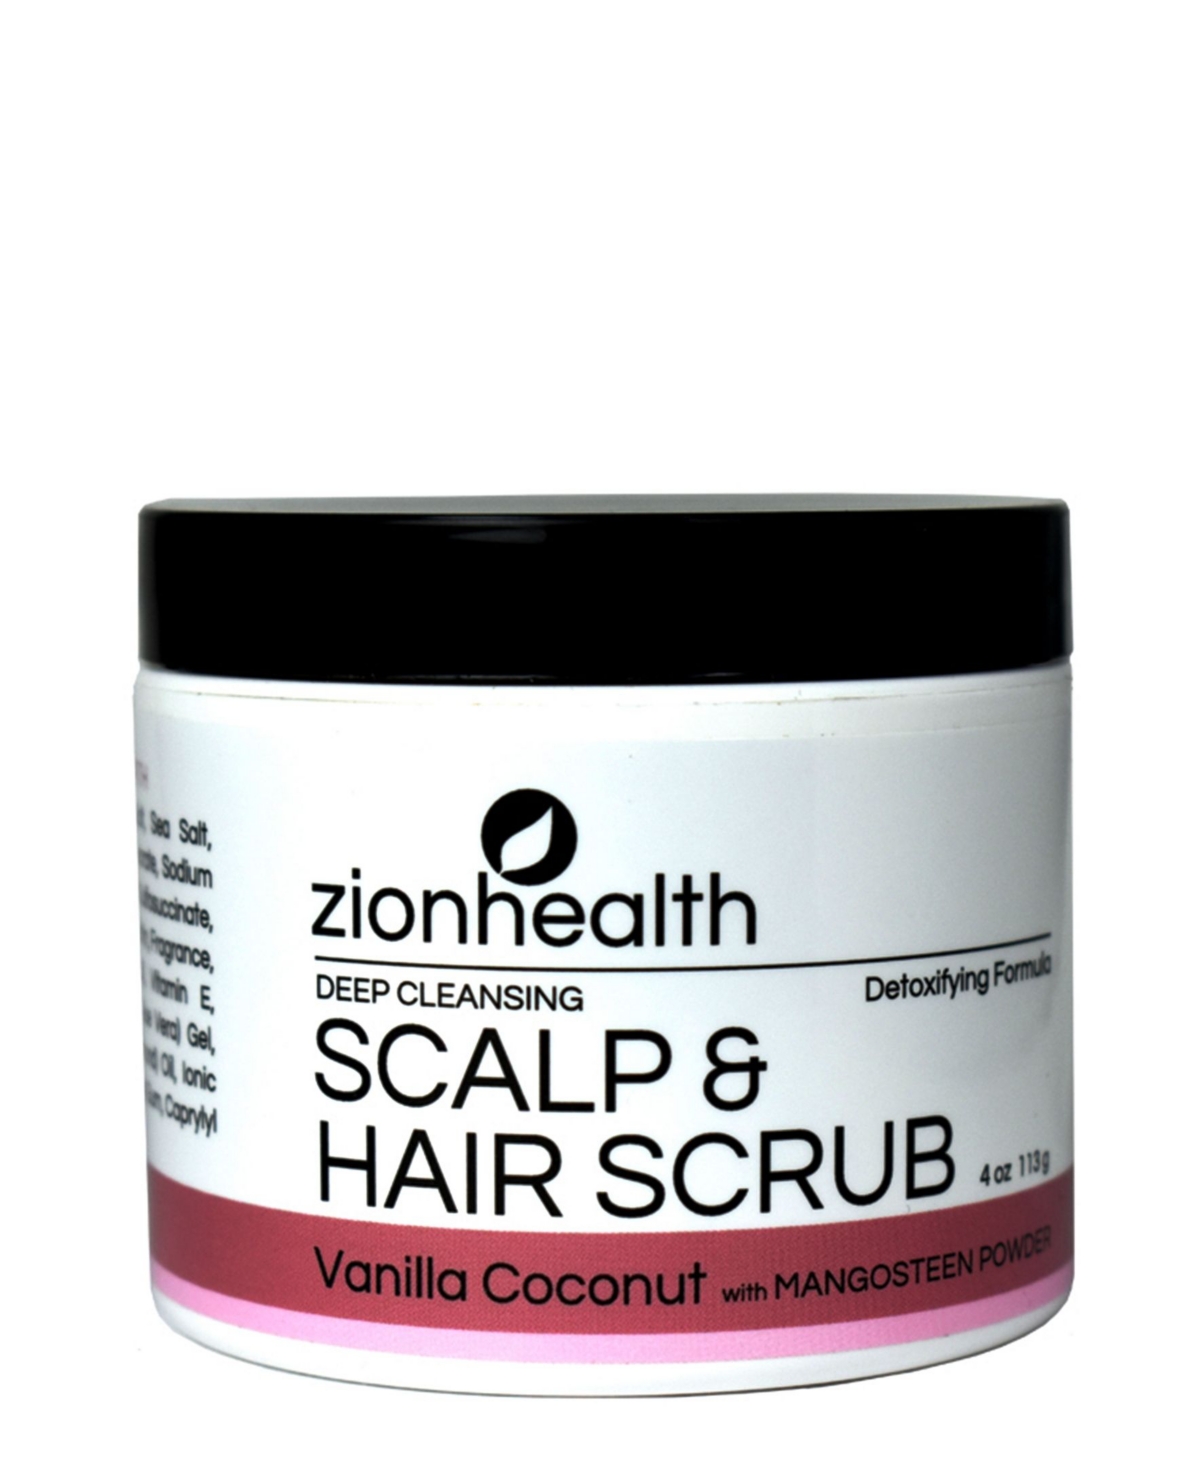 Hair Scrub, Vanilla Coconut Scent, 4 oz - No COLOR